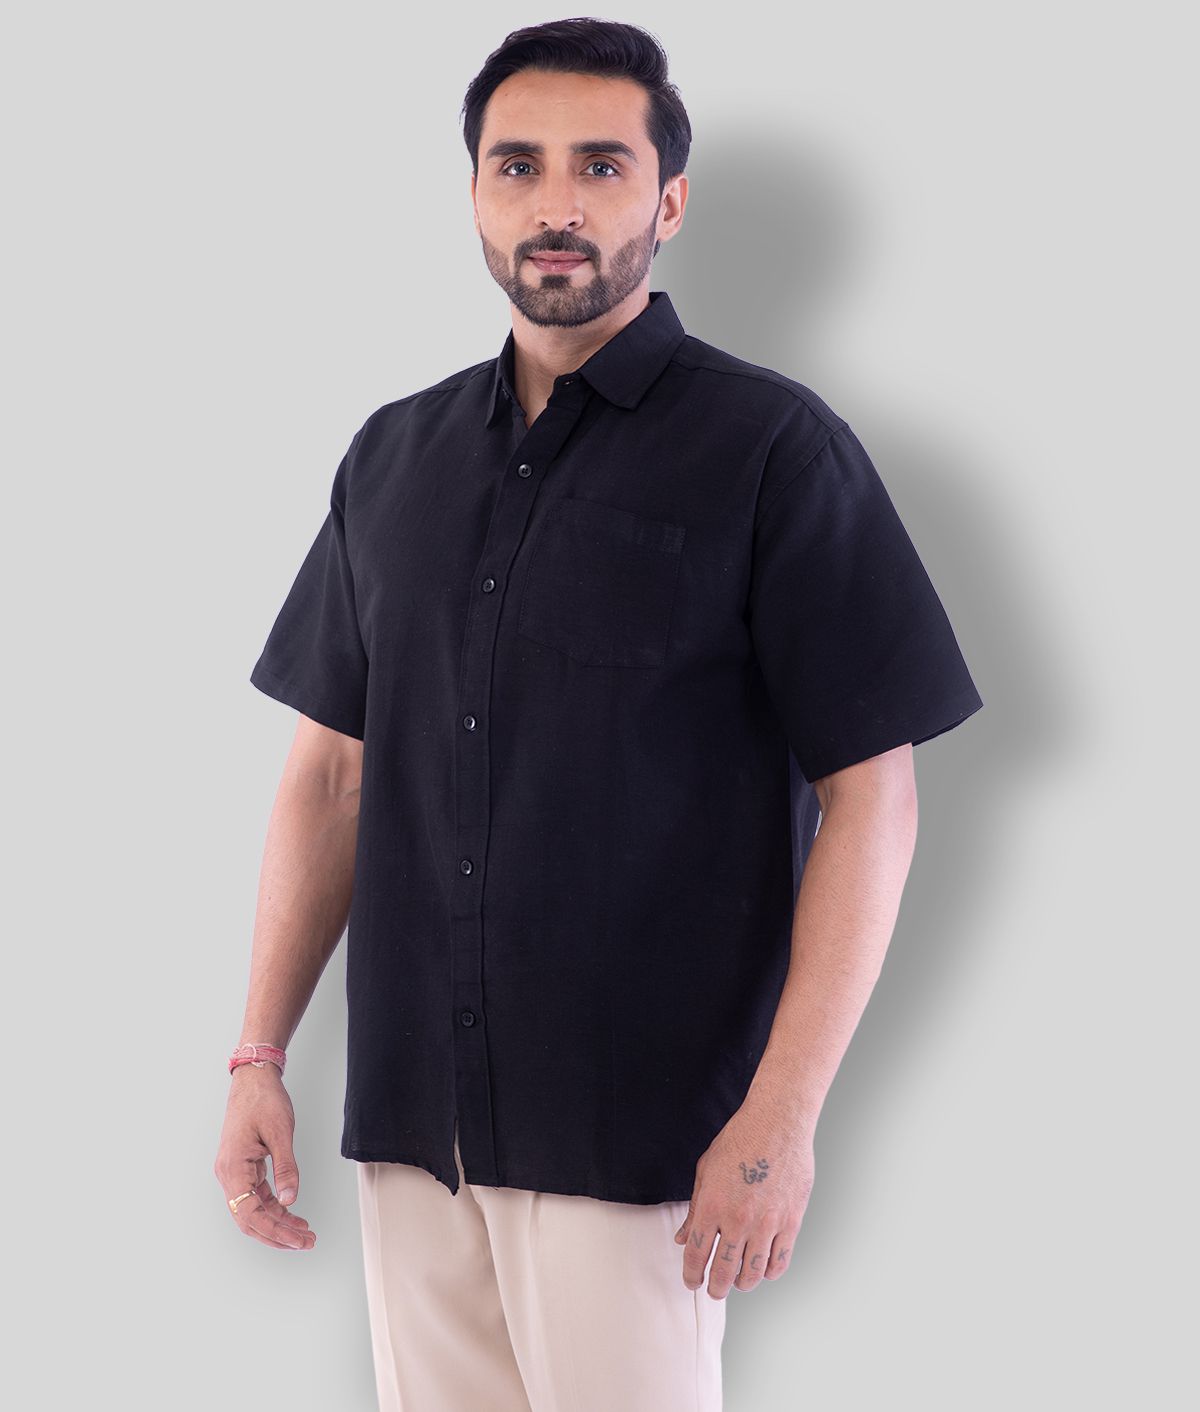     			DESHBANDHU DBK - Black Cotton Regular Fit Men's Casual Shirt ( Pack of 1 )